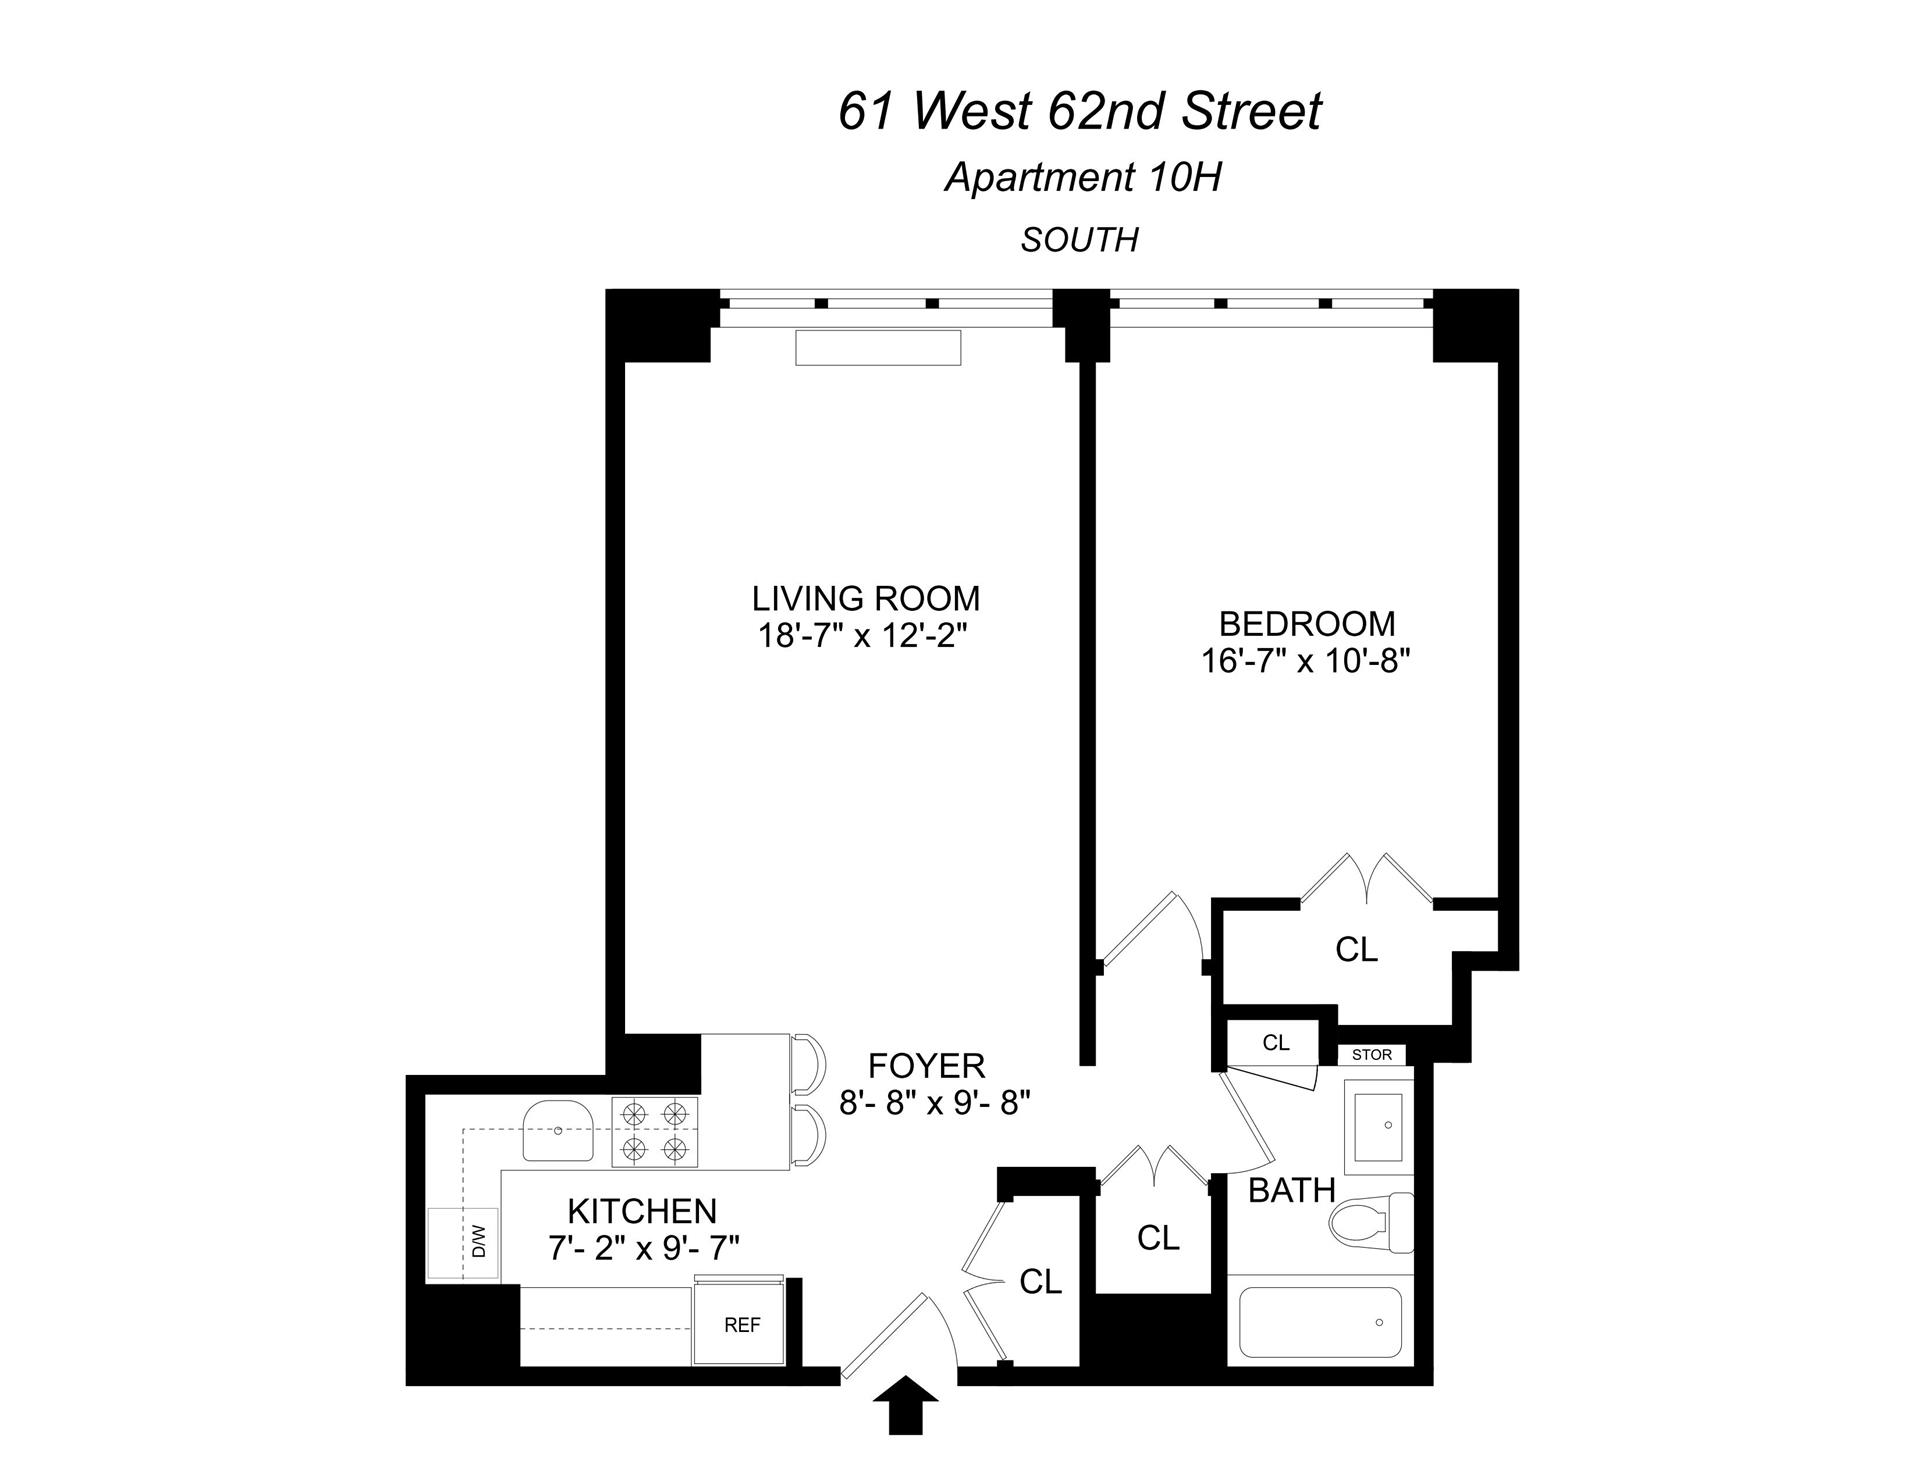 Floorplan for 61 West 62nd Street, 10H